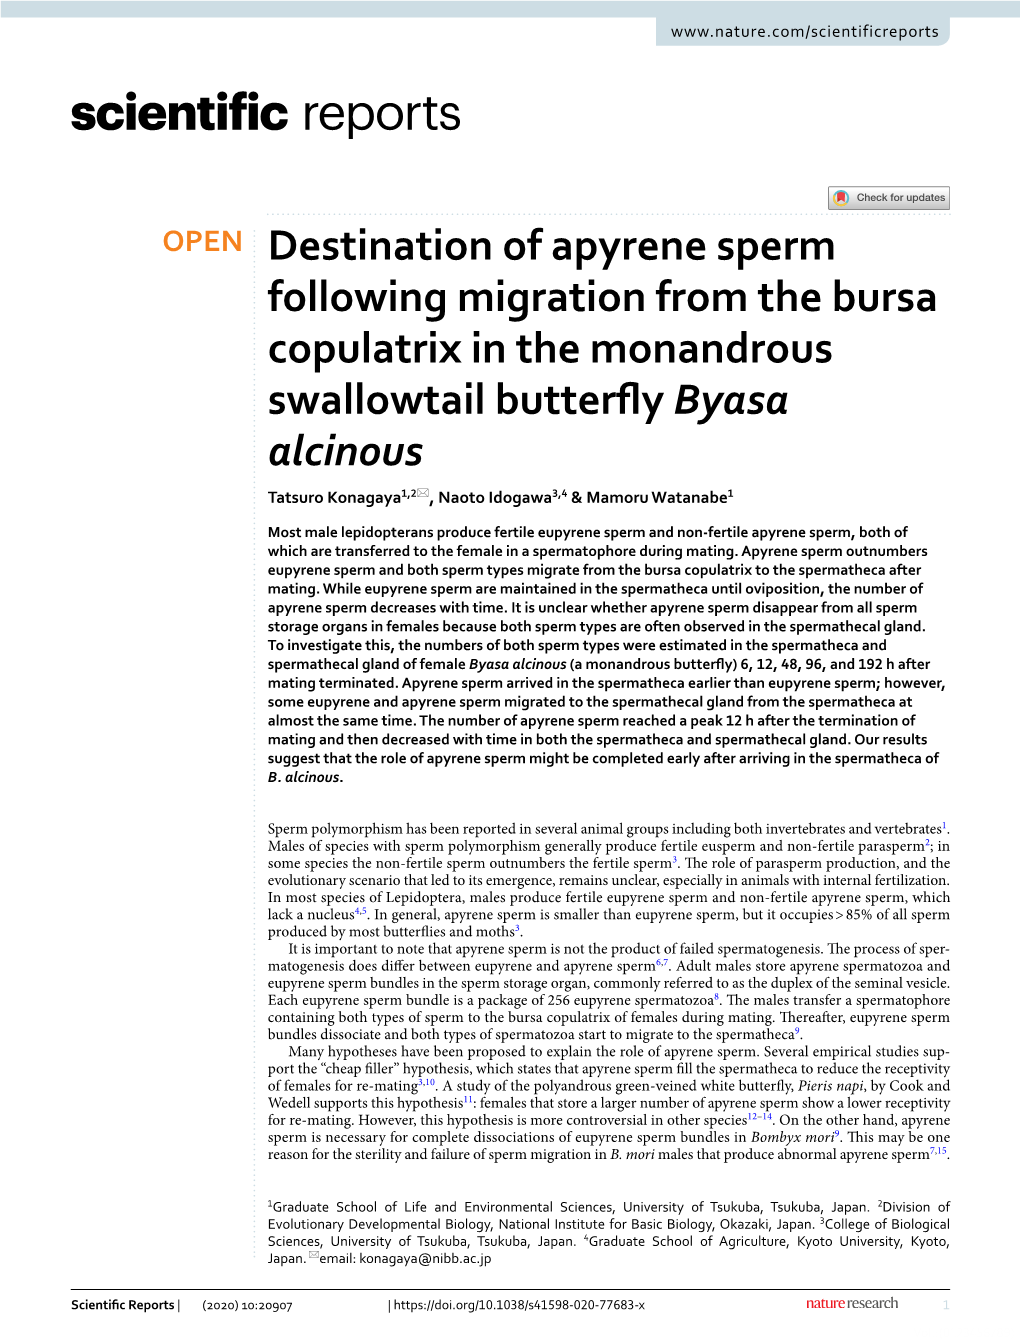 Destination of Apyrene Sperm Following Migration from the Bursa